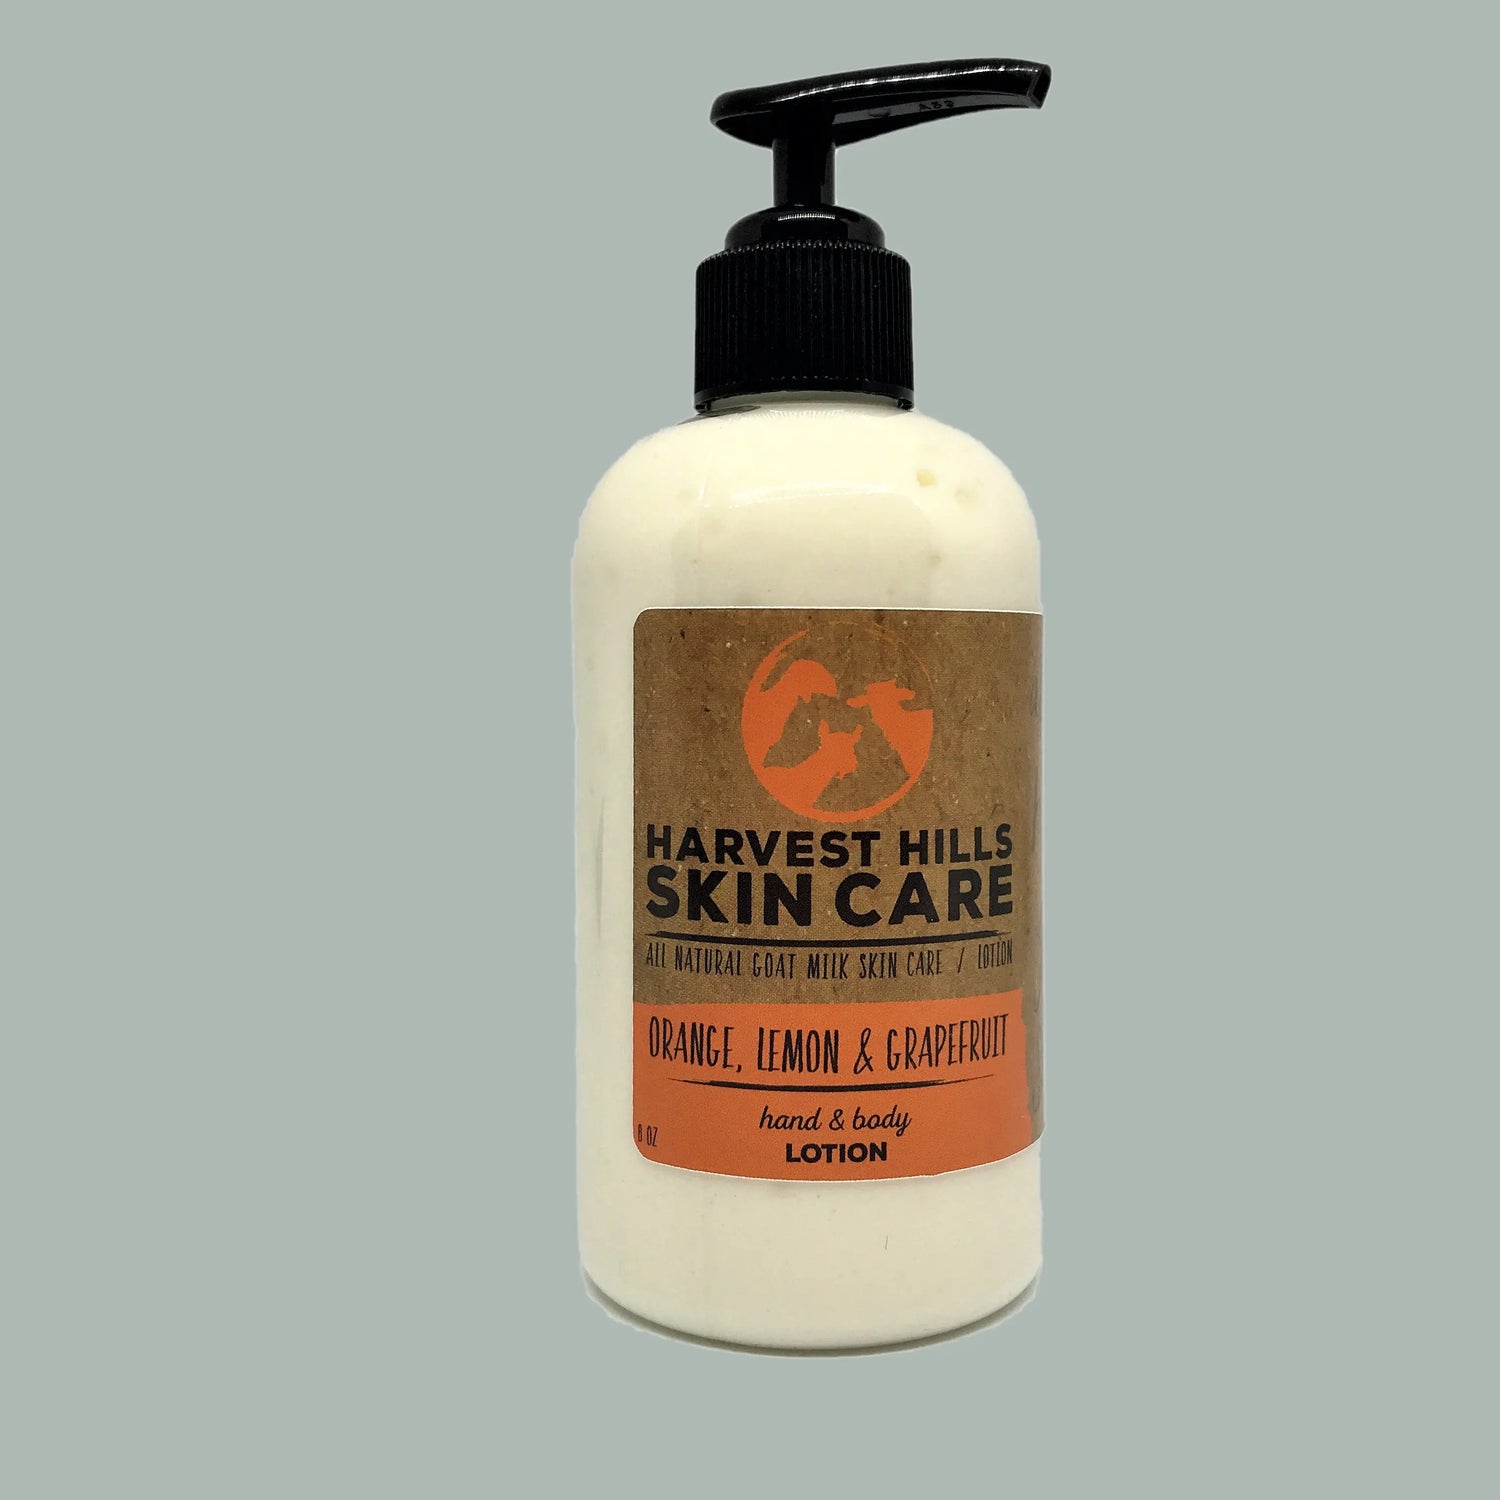 Orange, Lemon $ Grapefruit Hand & Body Lotion Harvest Hills Skin Care All Natural Goat Milk Skin Care